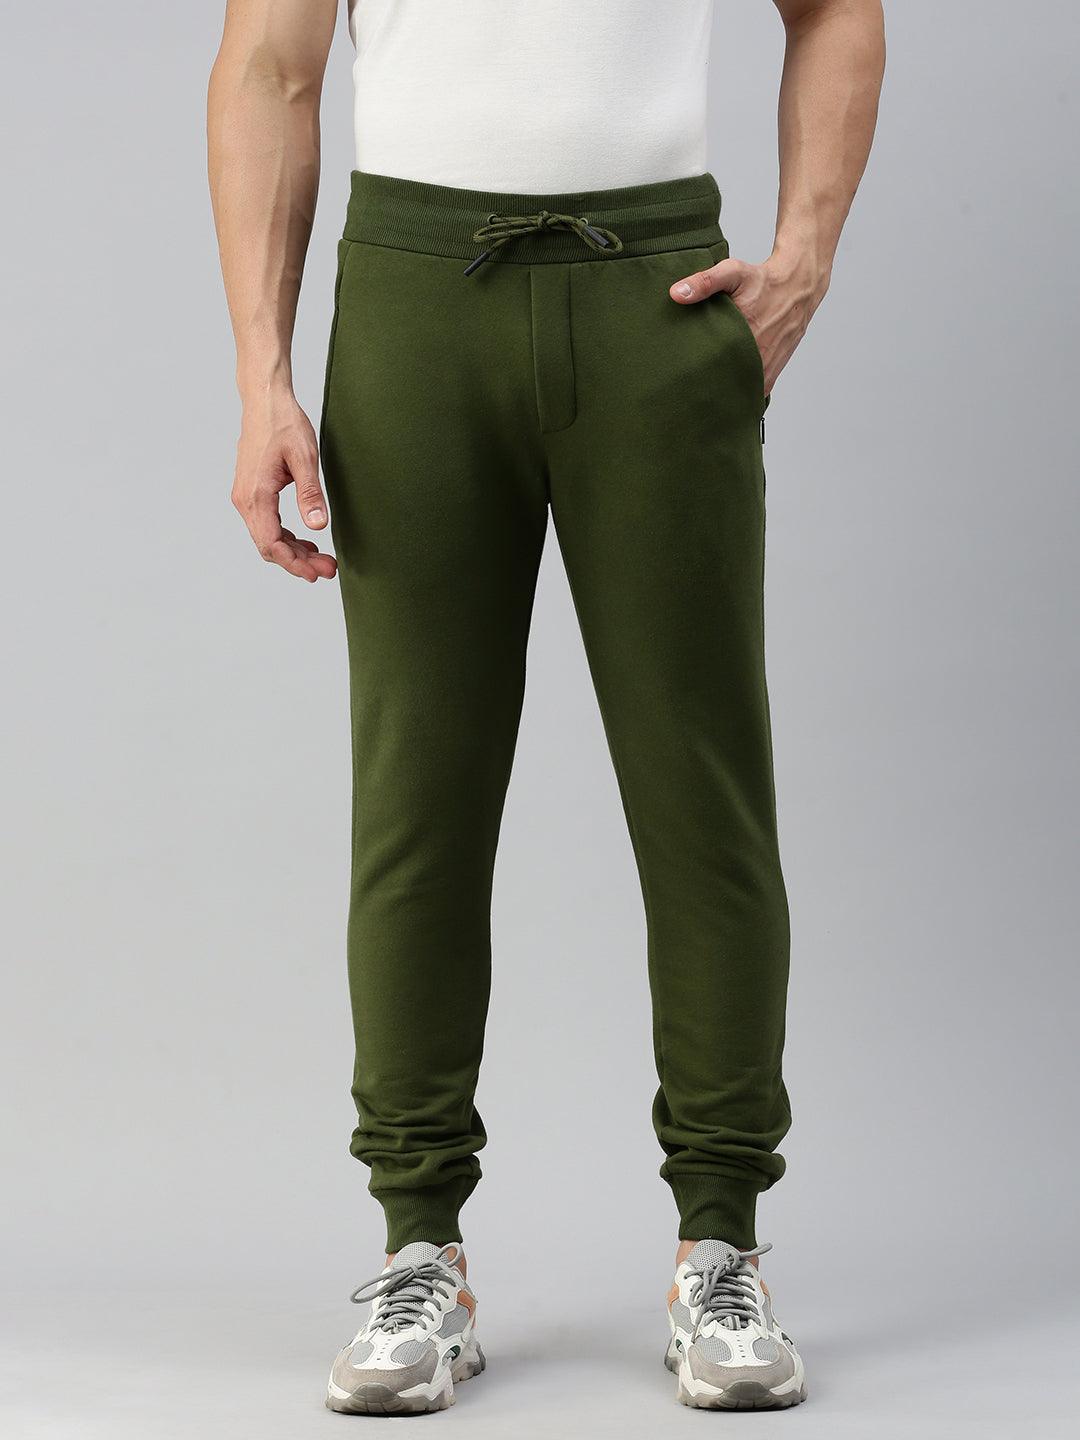 Stylish Men's Track Pants | Shop Sporto Collection